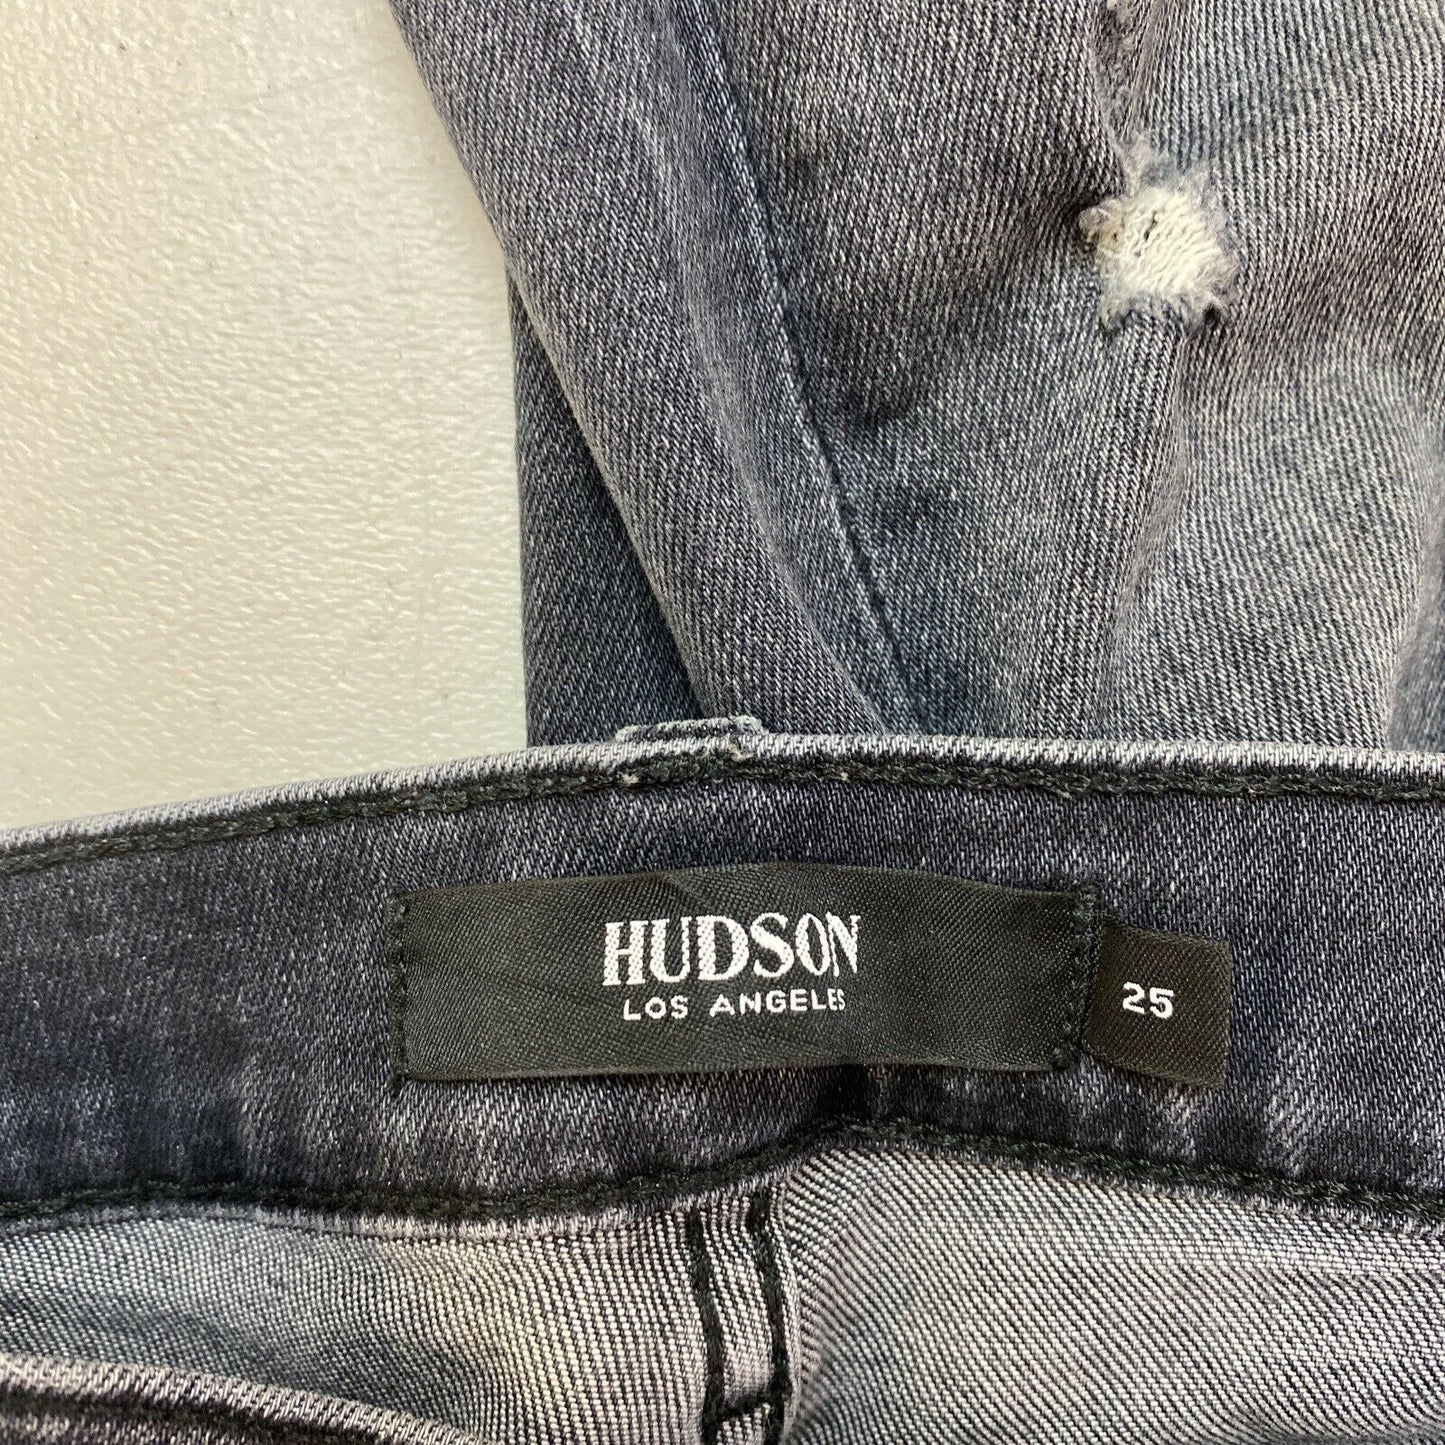 Hudson Women's Gray Wash Barbara Super Skinny Stretch Jeans Sz 25